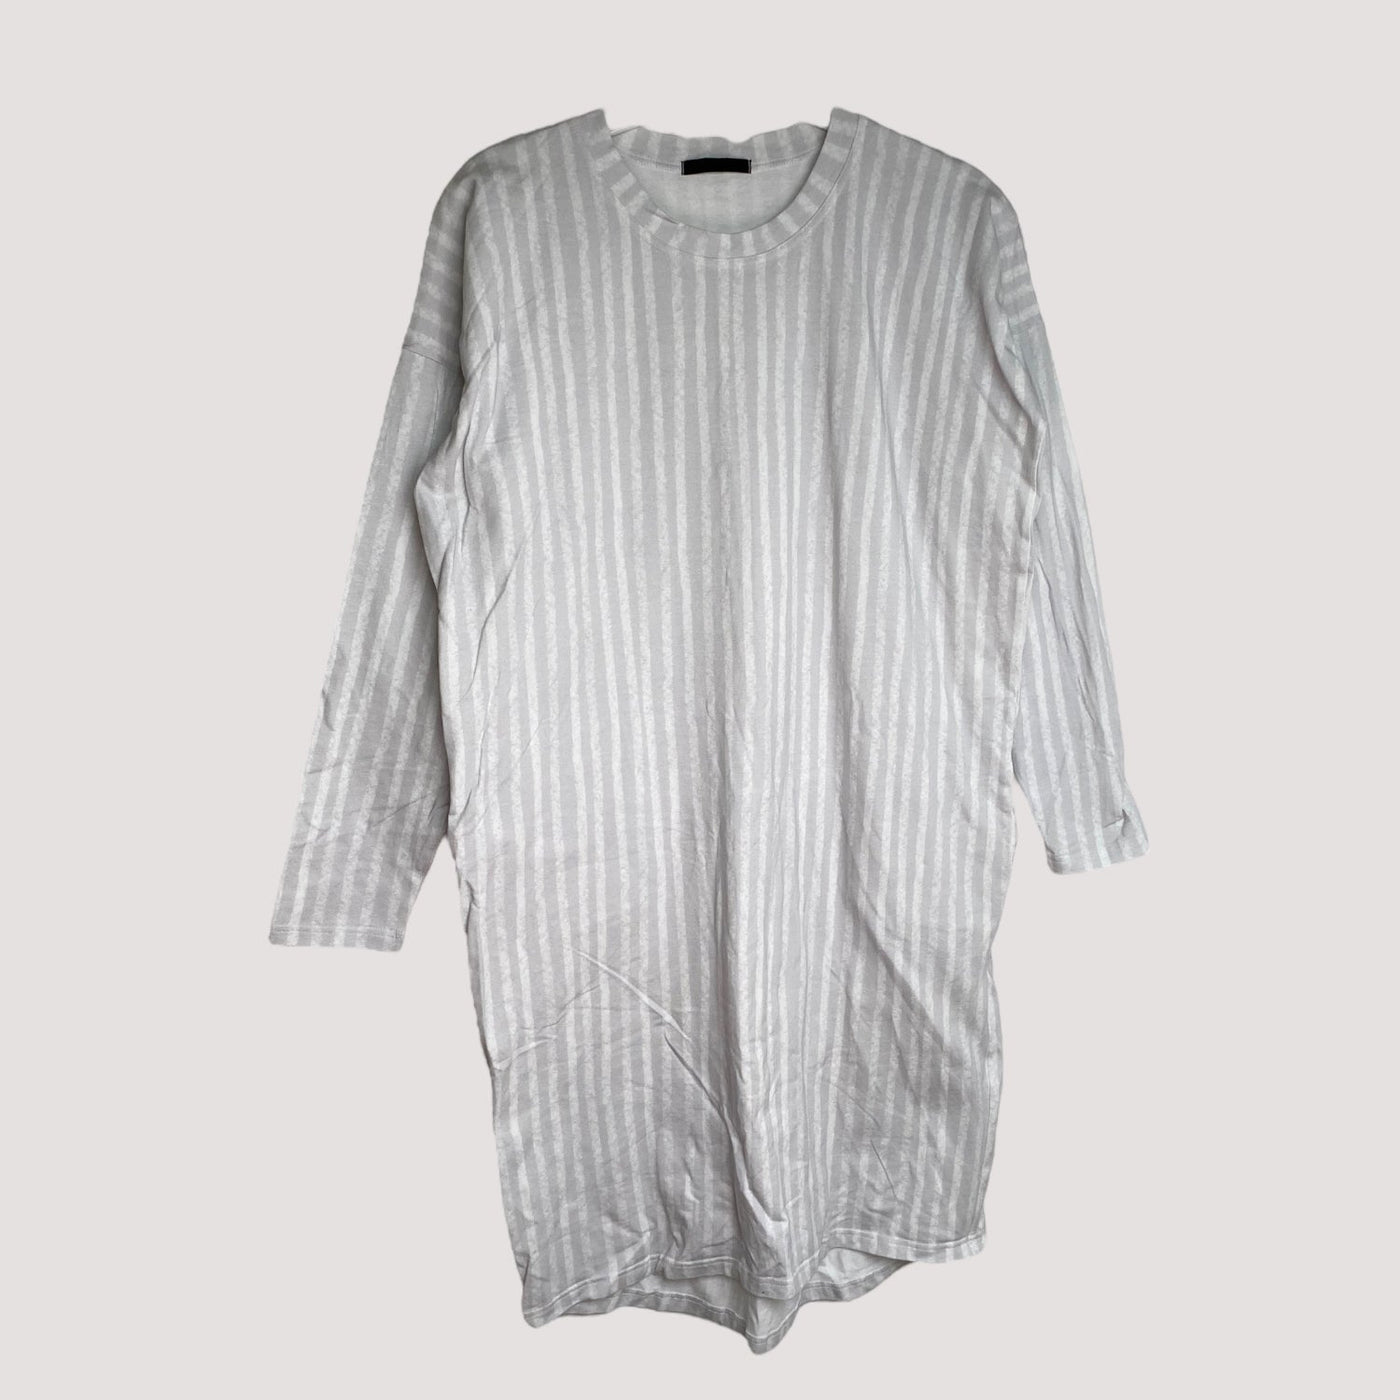 Vimma t-shirt dress, white/grey | women onesize